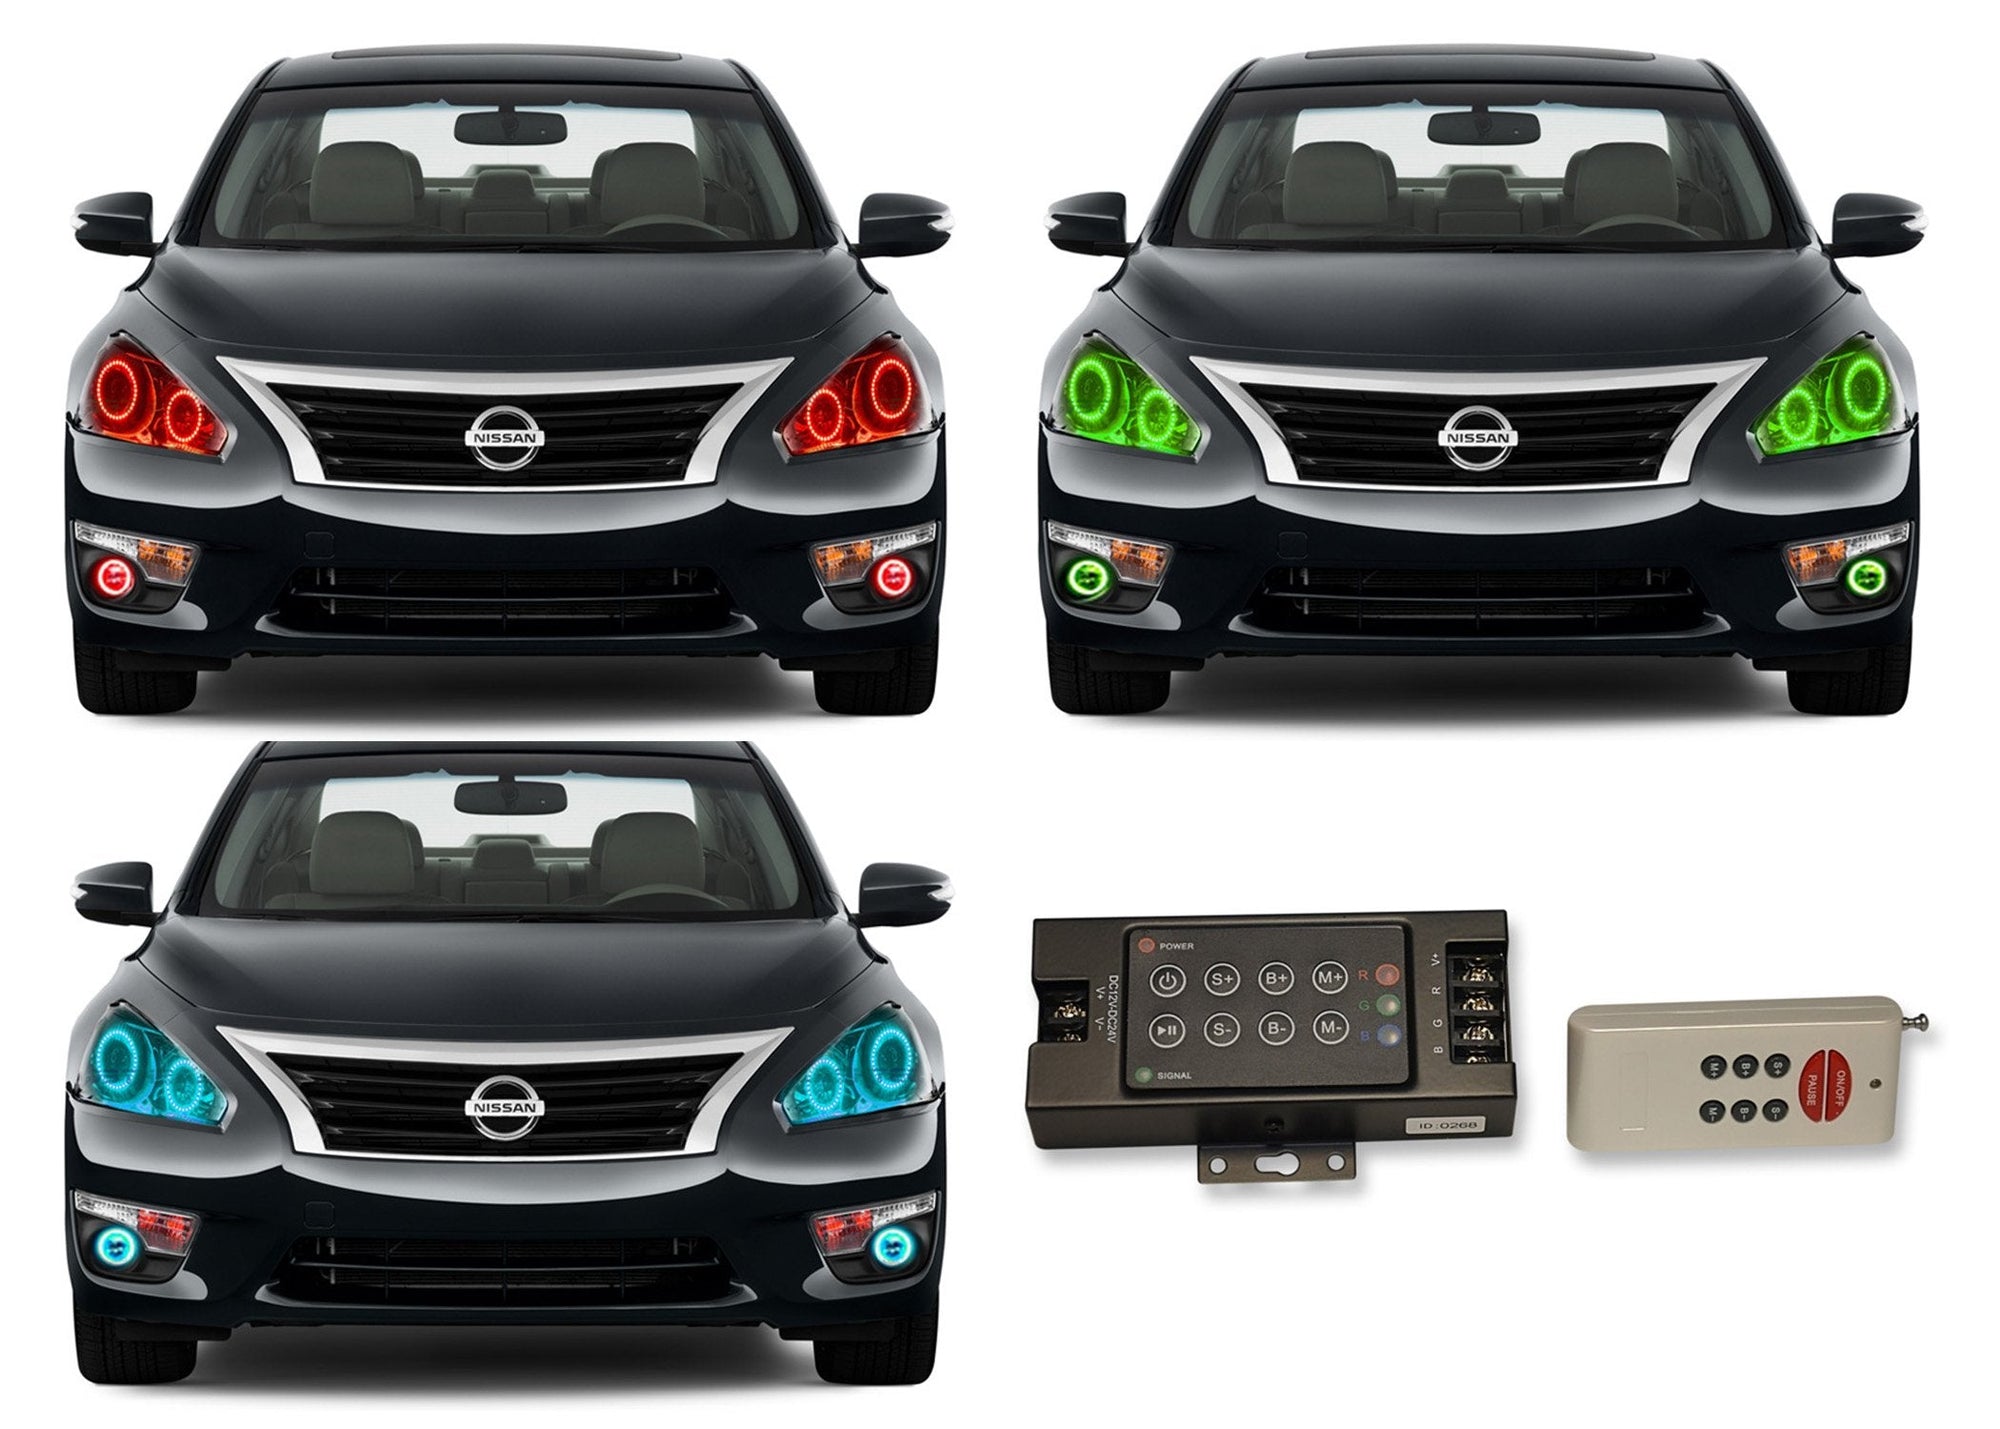 Nissan-Altima-2013, 2014, 2015-LED-Halo-Headlights and Fog Lights-RGB-RF Remote-NI-ALS1315-V3HFRF